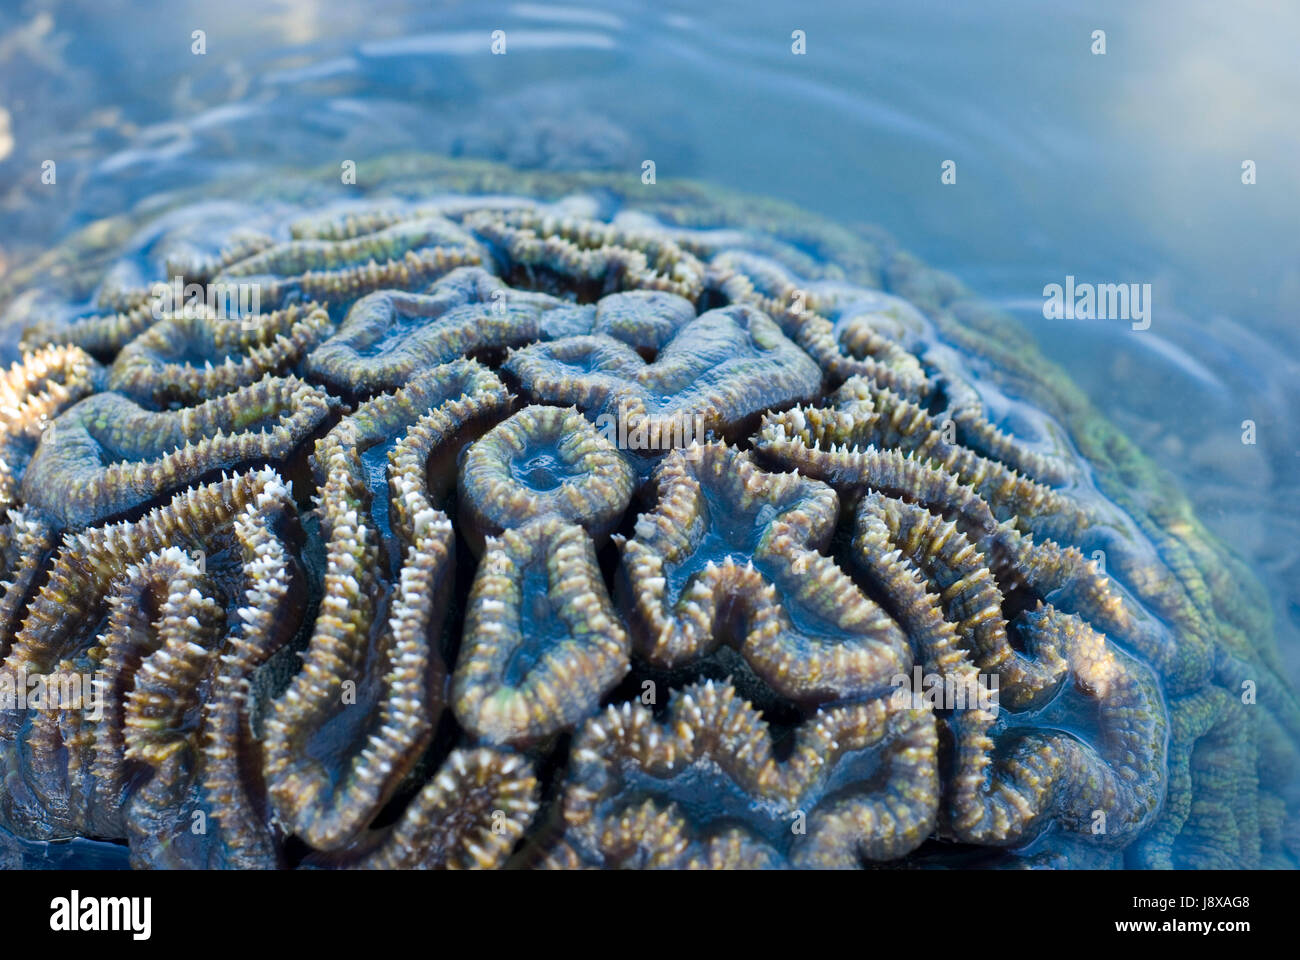 reef, navy, marine, coral, blue, animal, surface, details, reef, navy, marine, Stock Photo